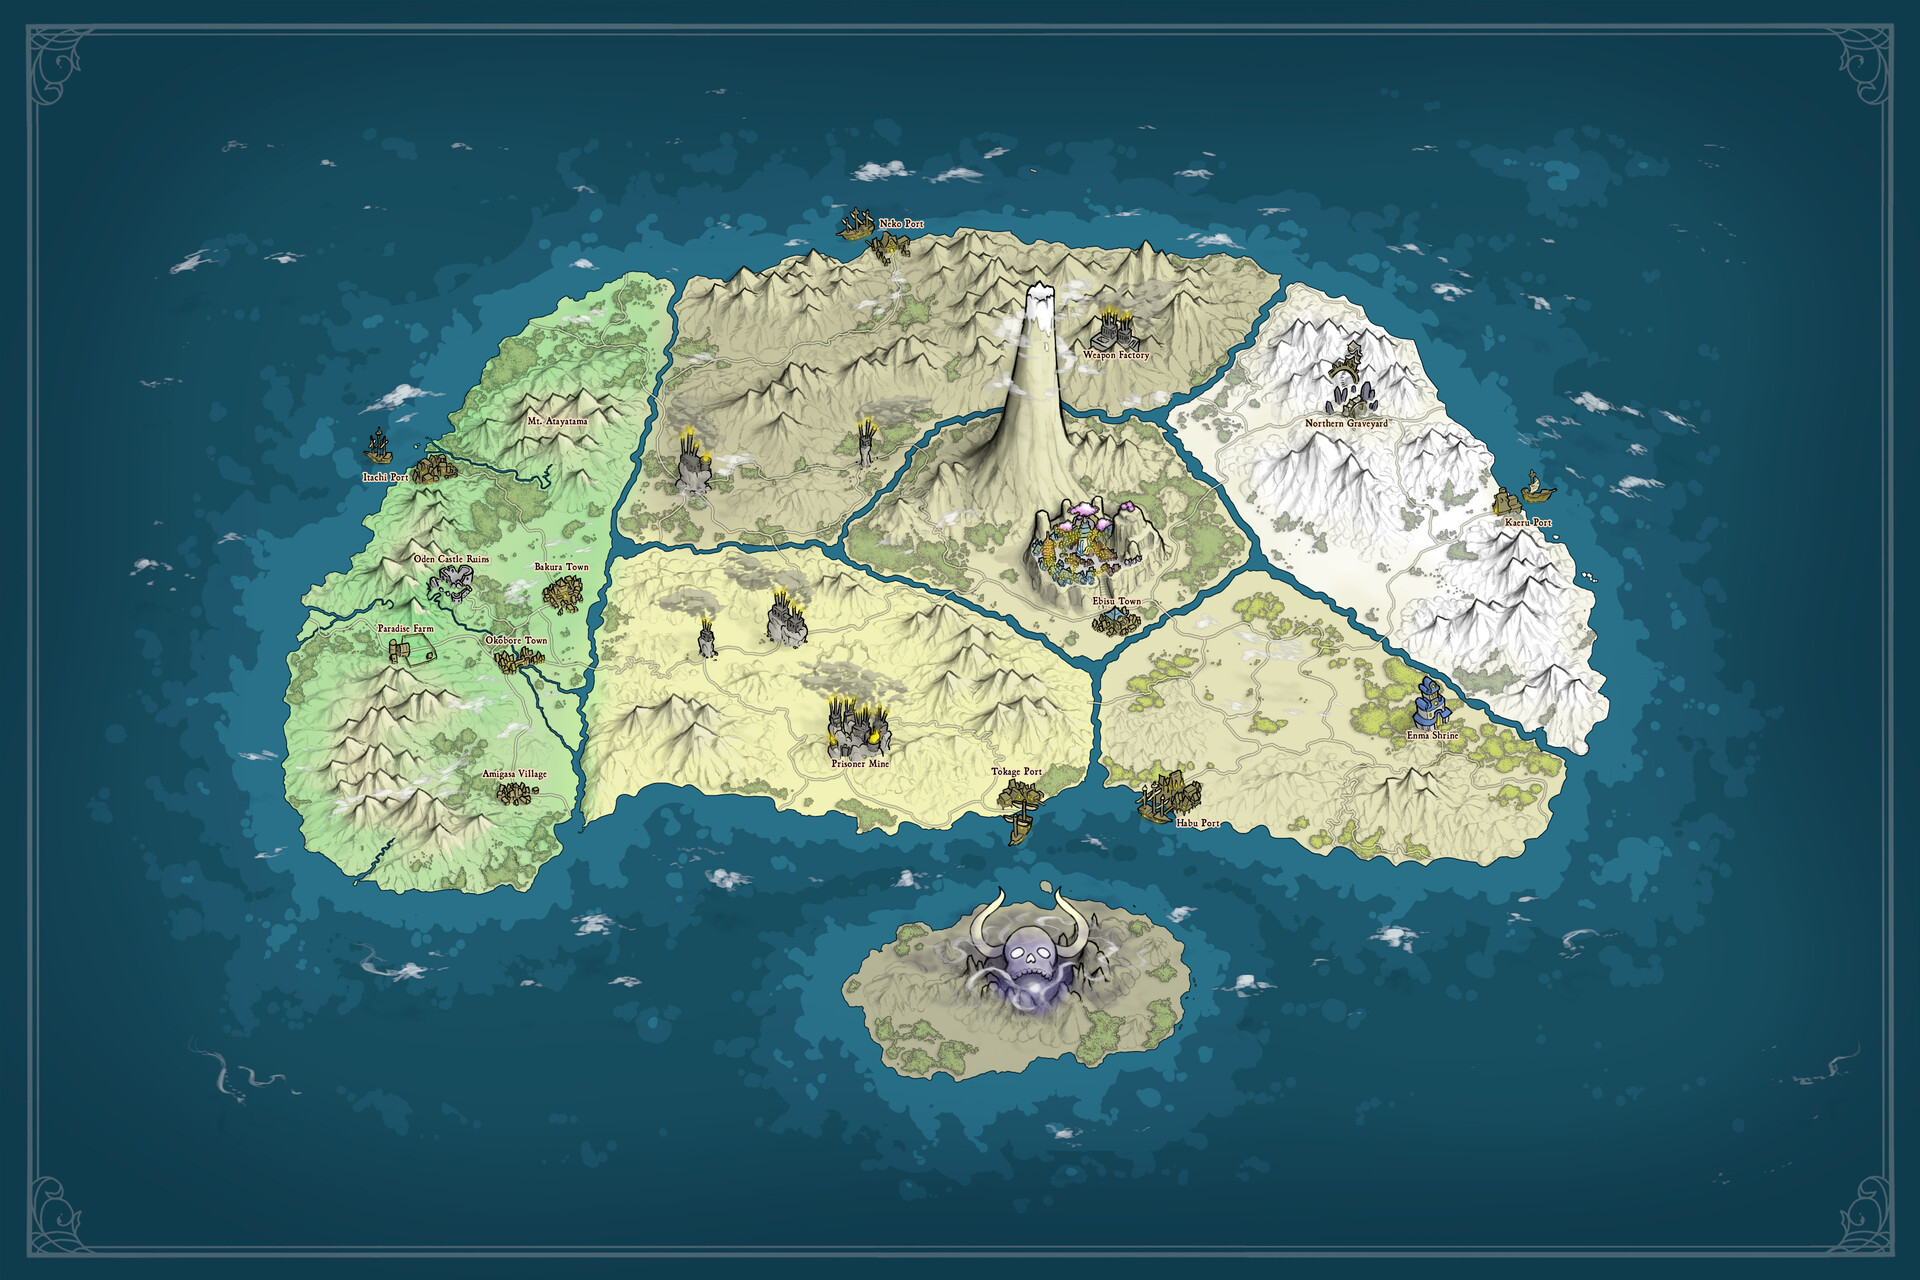 One piece anime island map